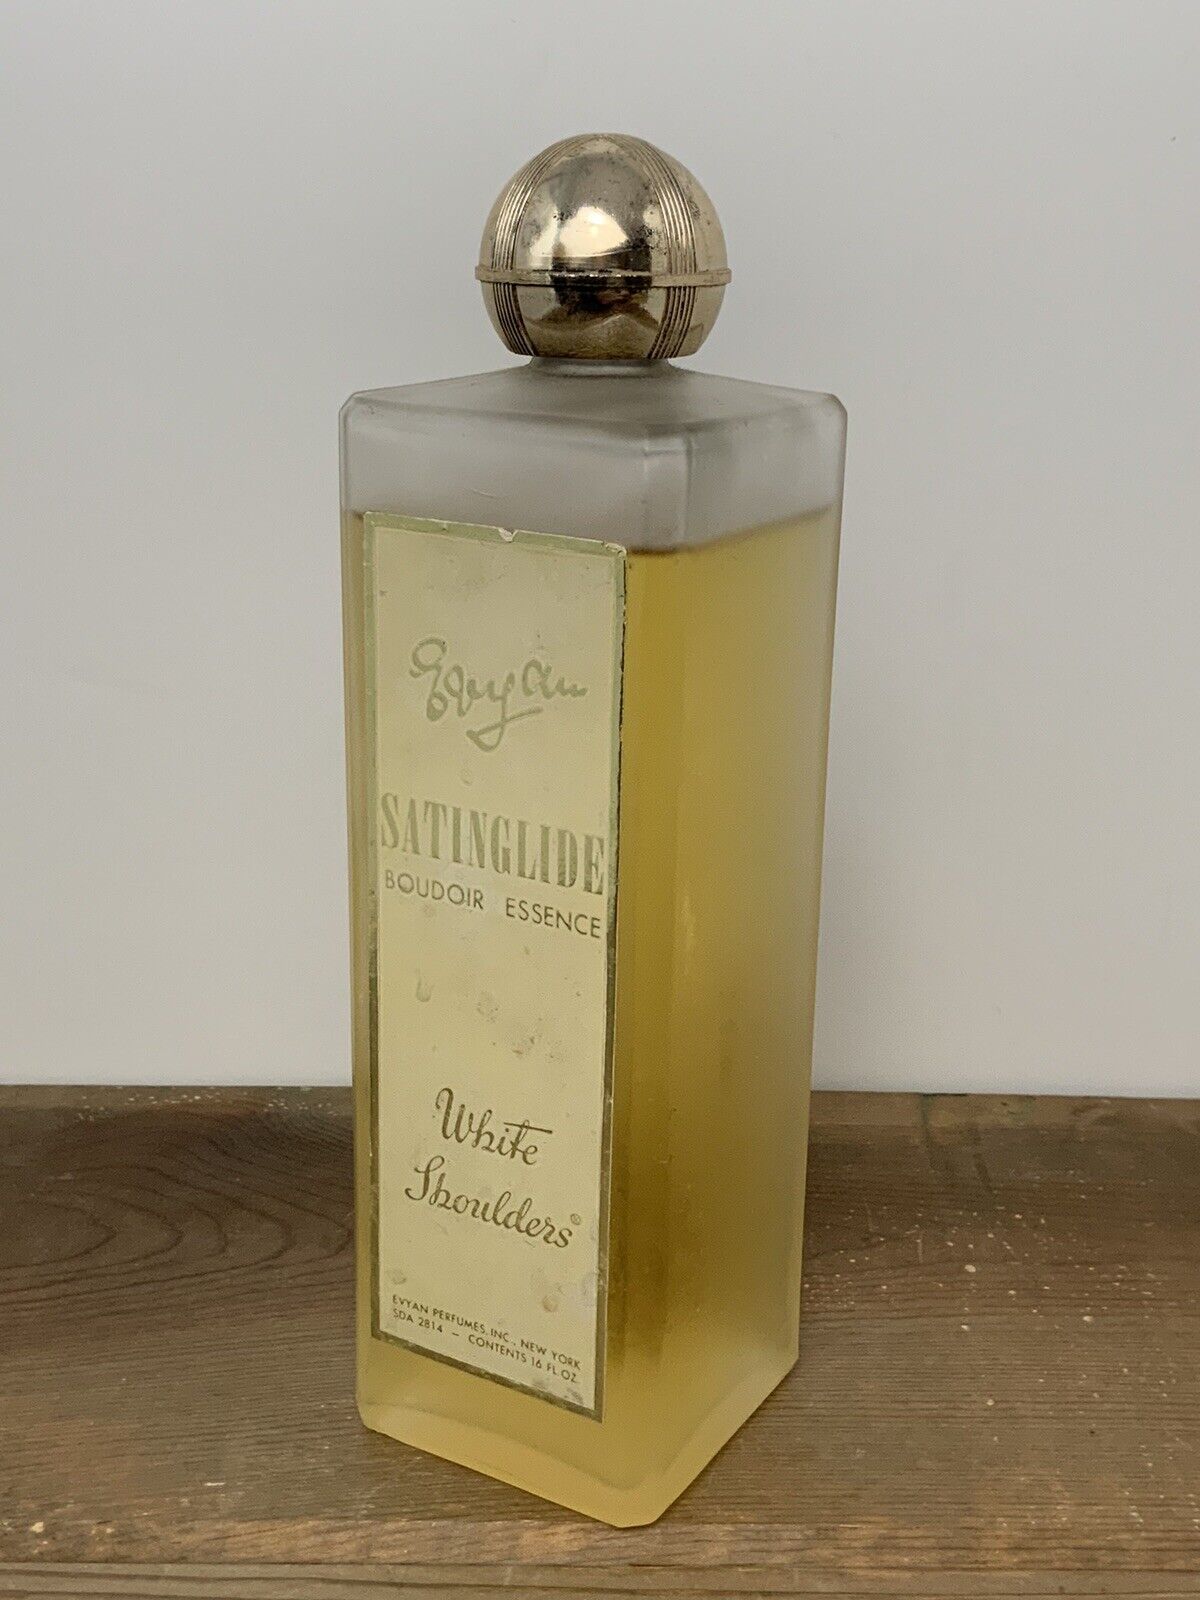 Vtg White Shoulders Satinglide Boudoir Essence Evyan Perfumes 16oz Rare 90%+